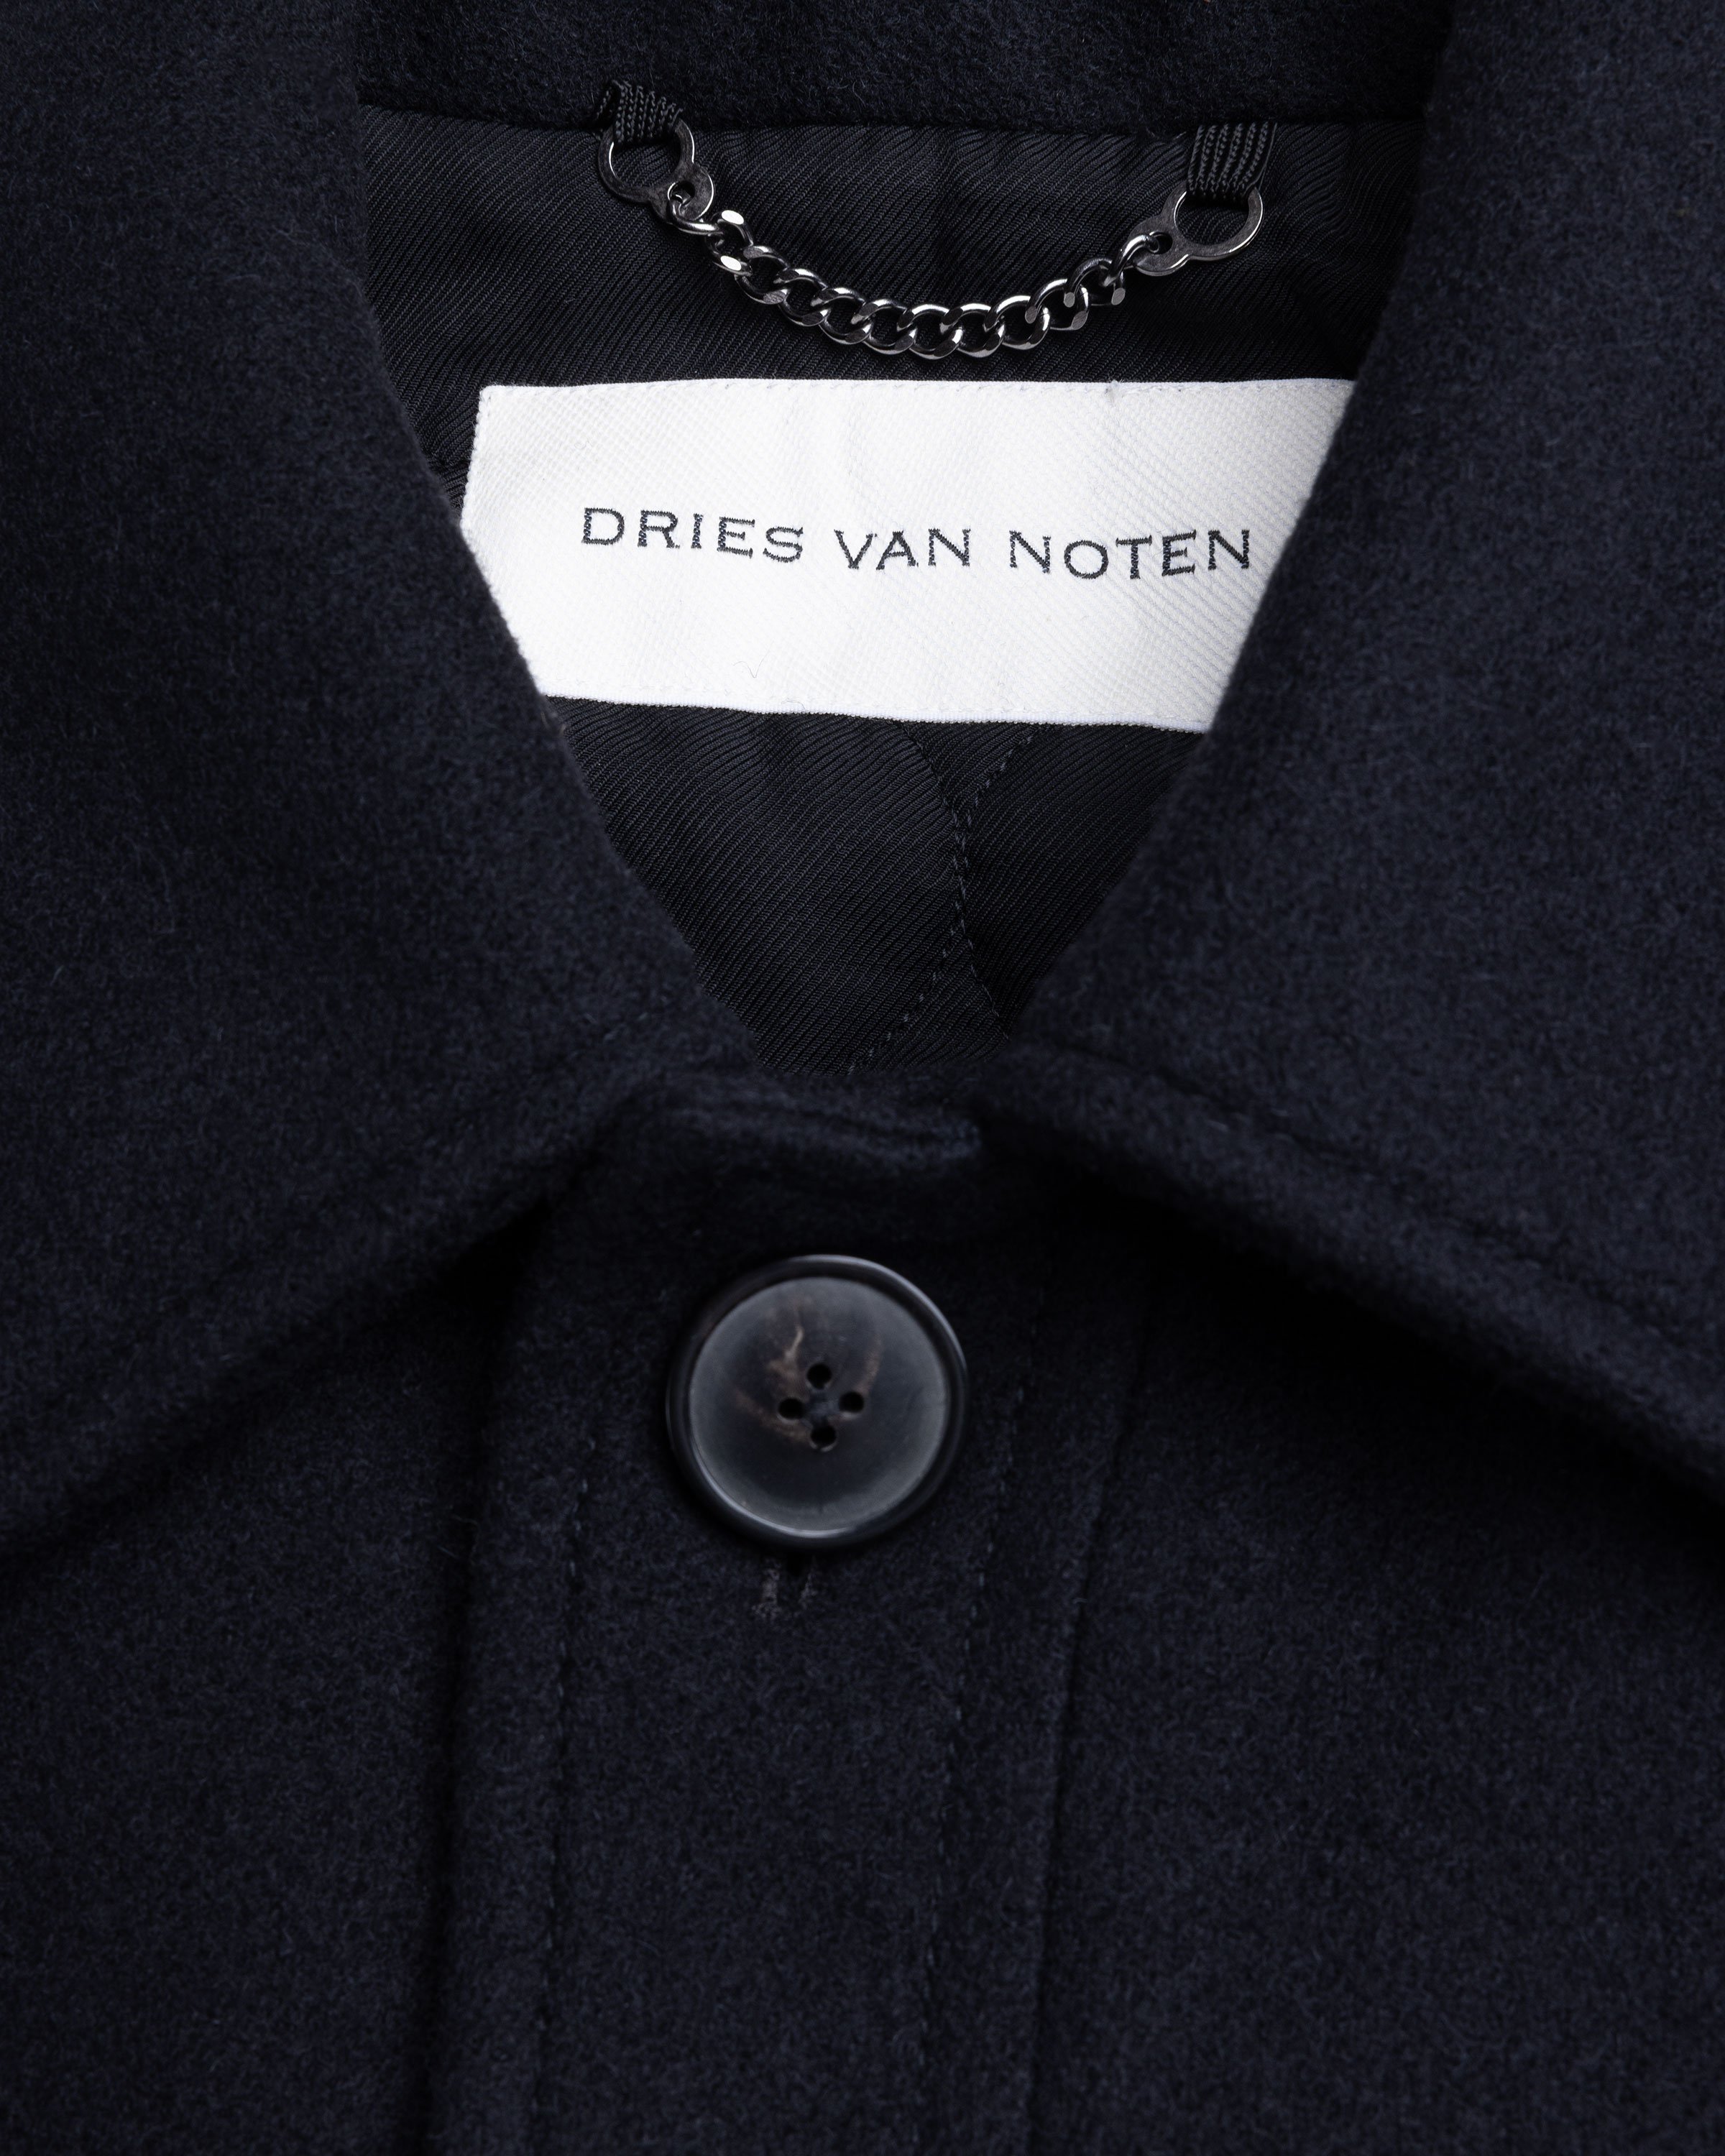 Dries van Noten - Valko Jacket Black - Clothing - Black - Image 5